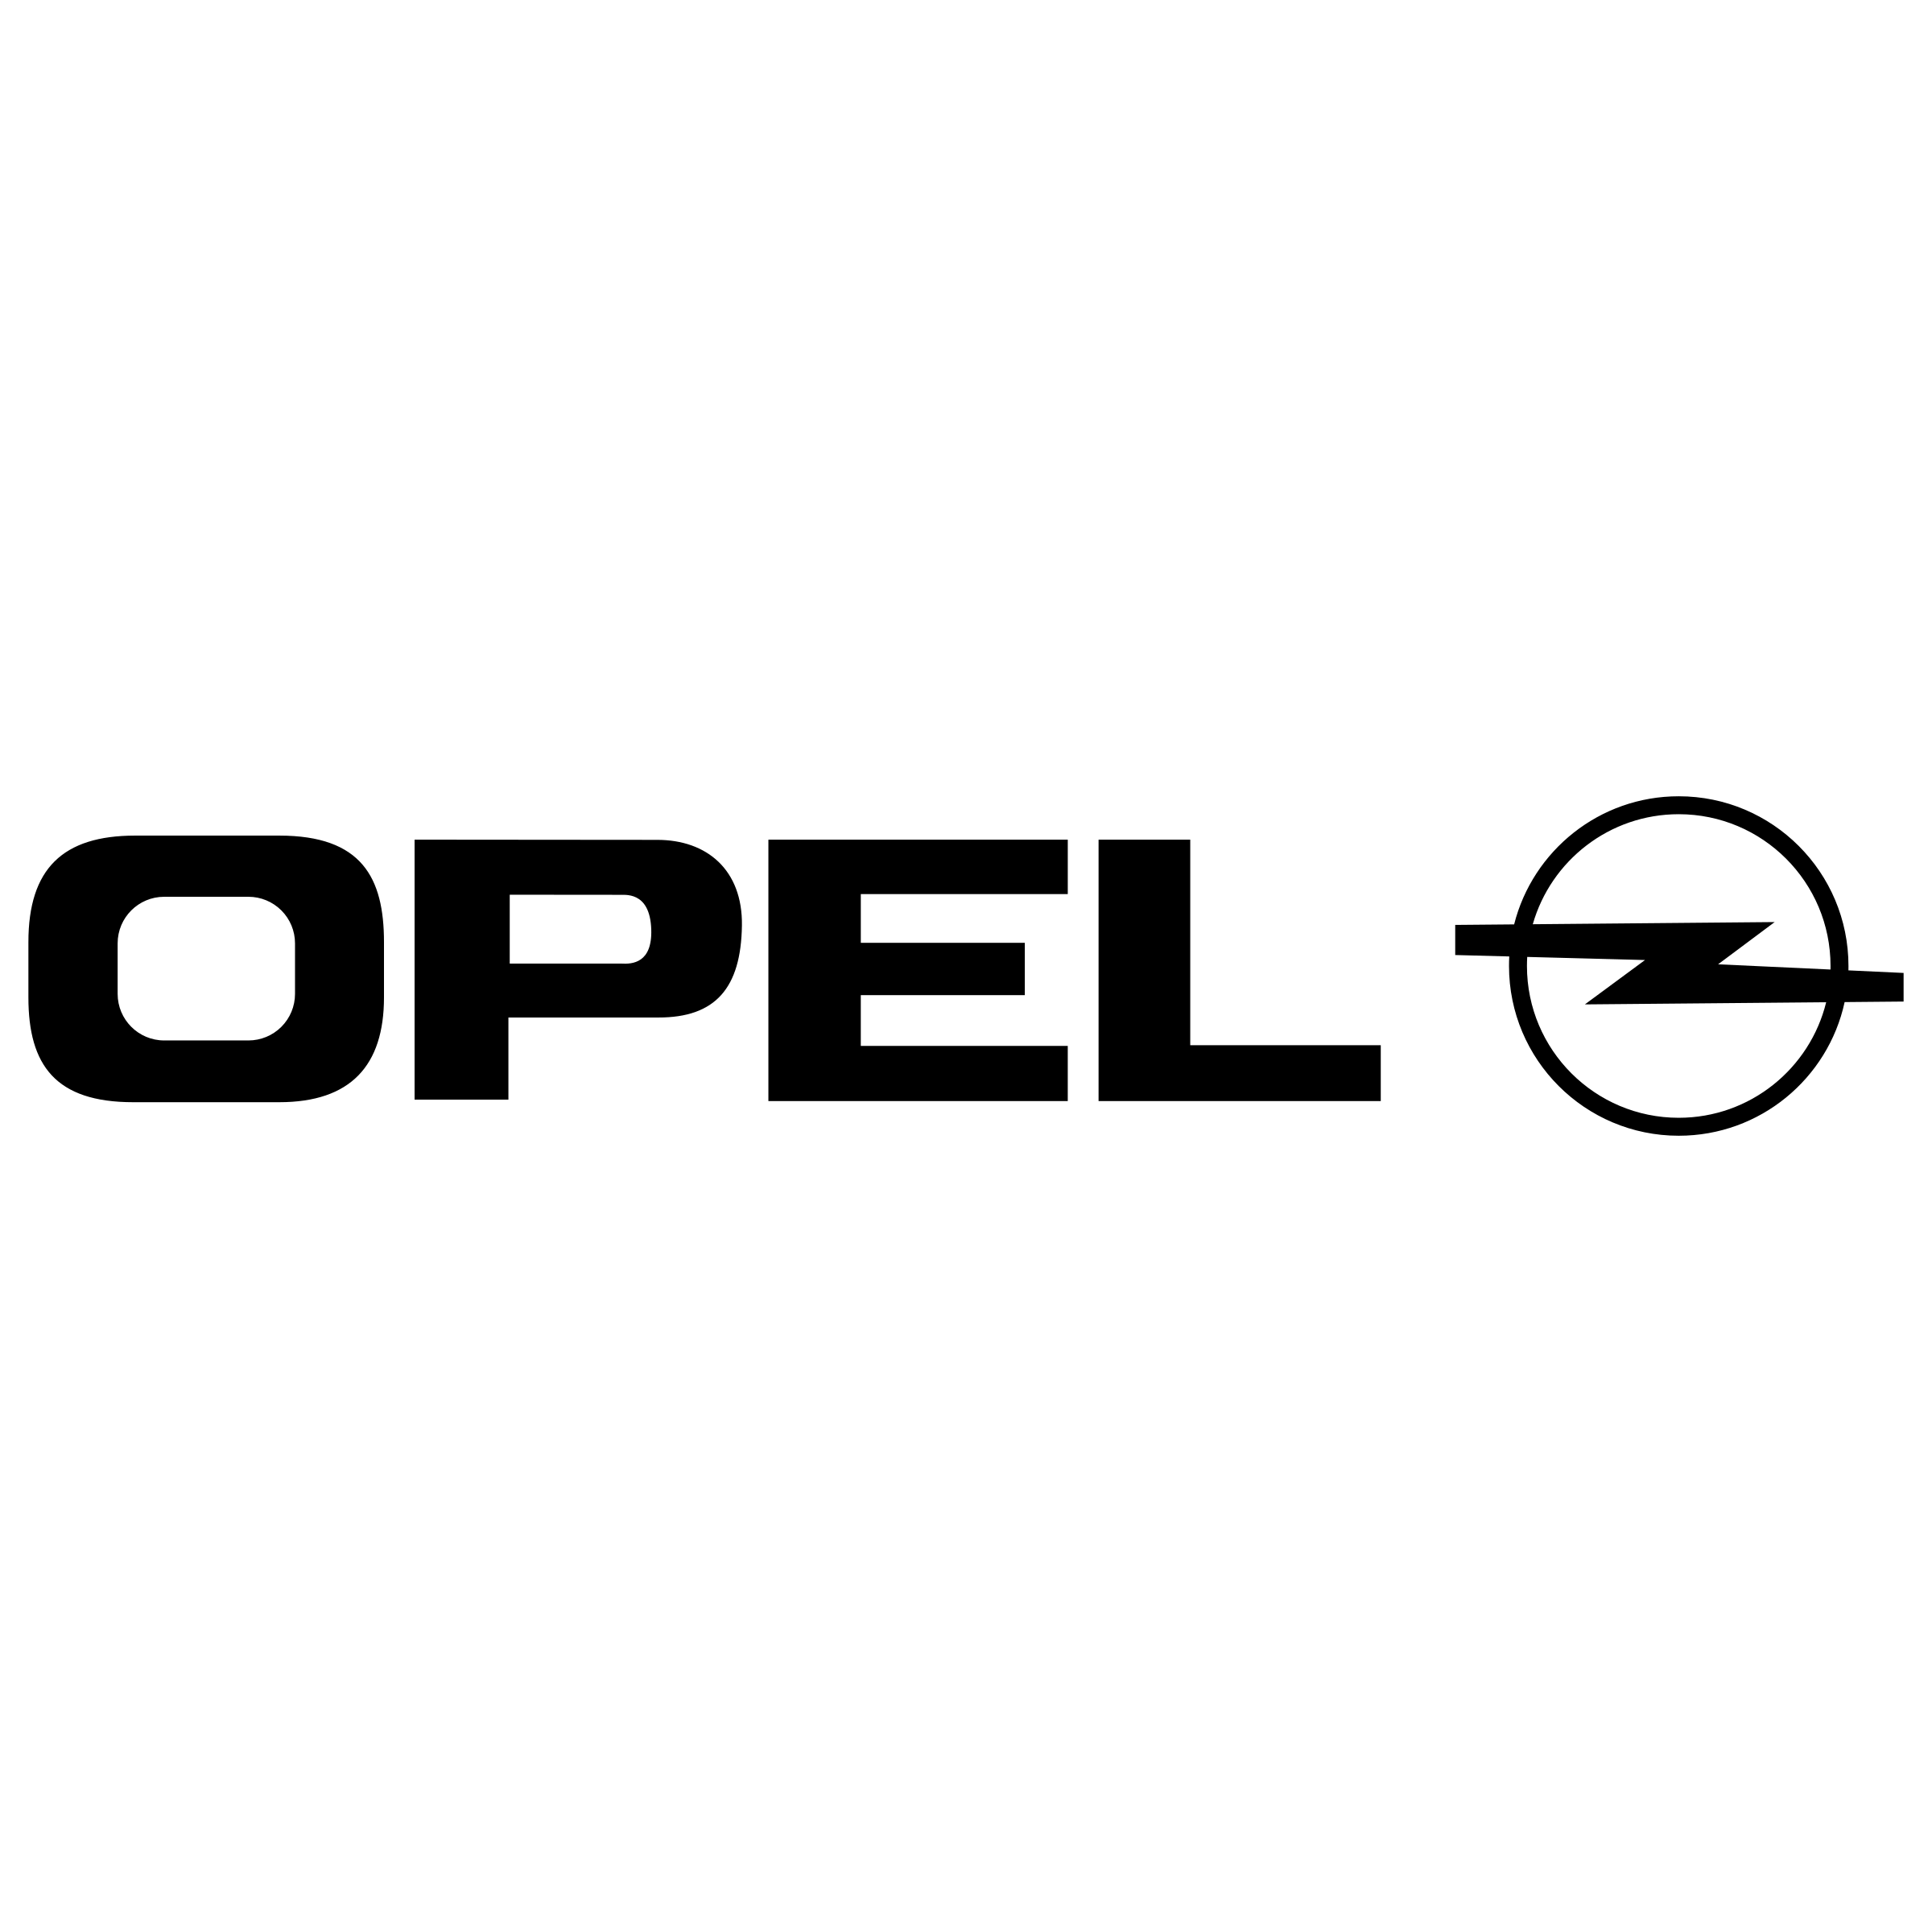 Opel Logo - Opel Logo PNG Transparent & SVG Vector - Freebie Supply